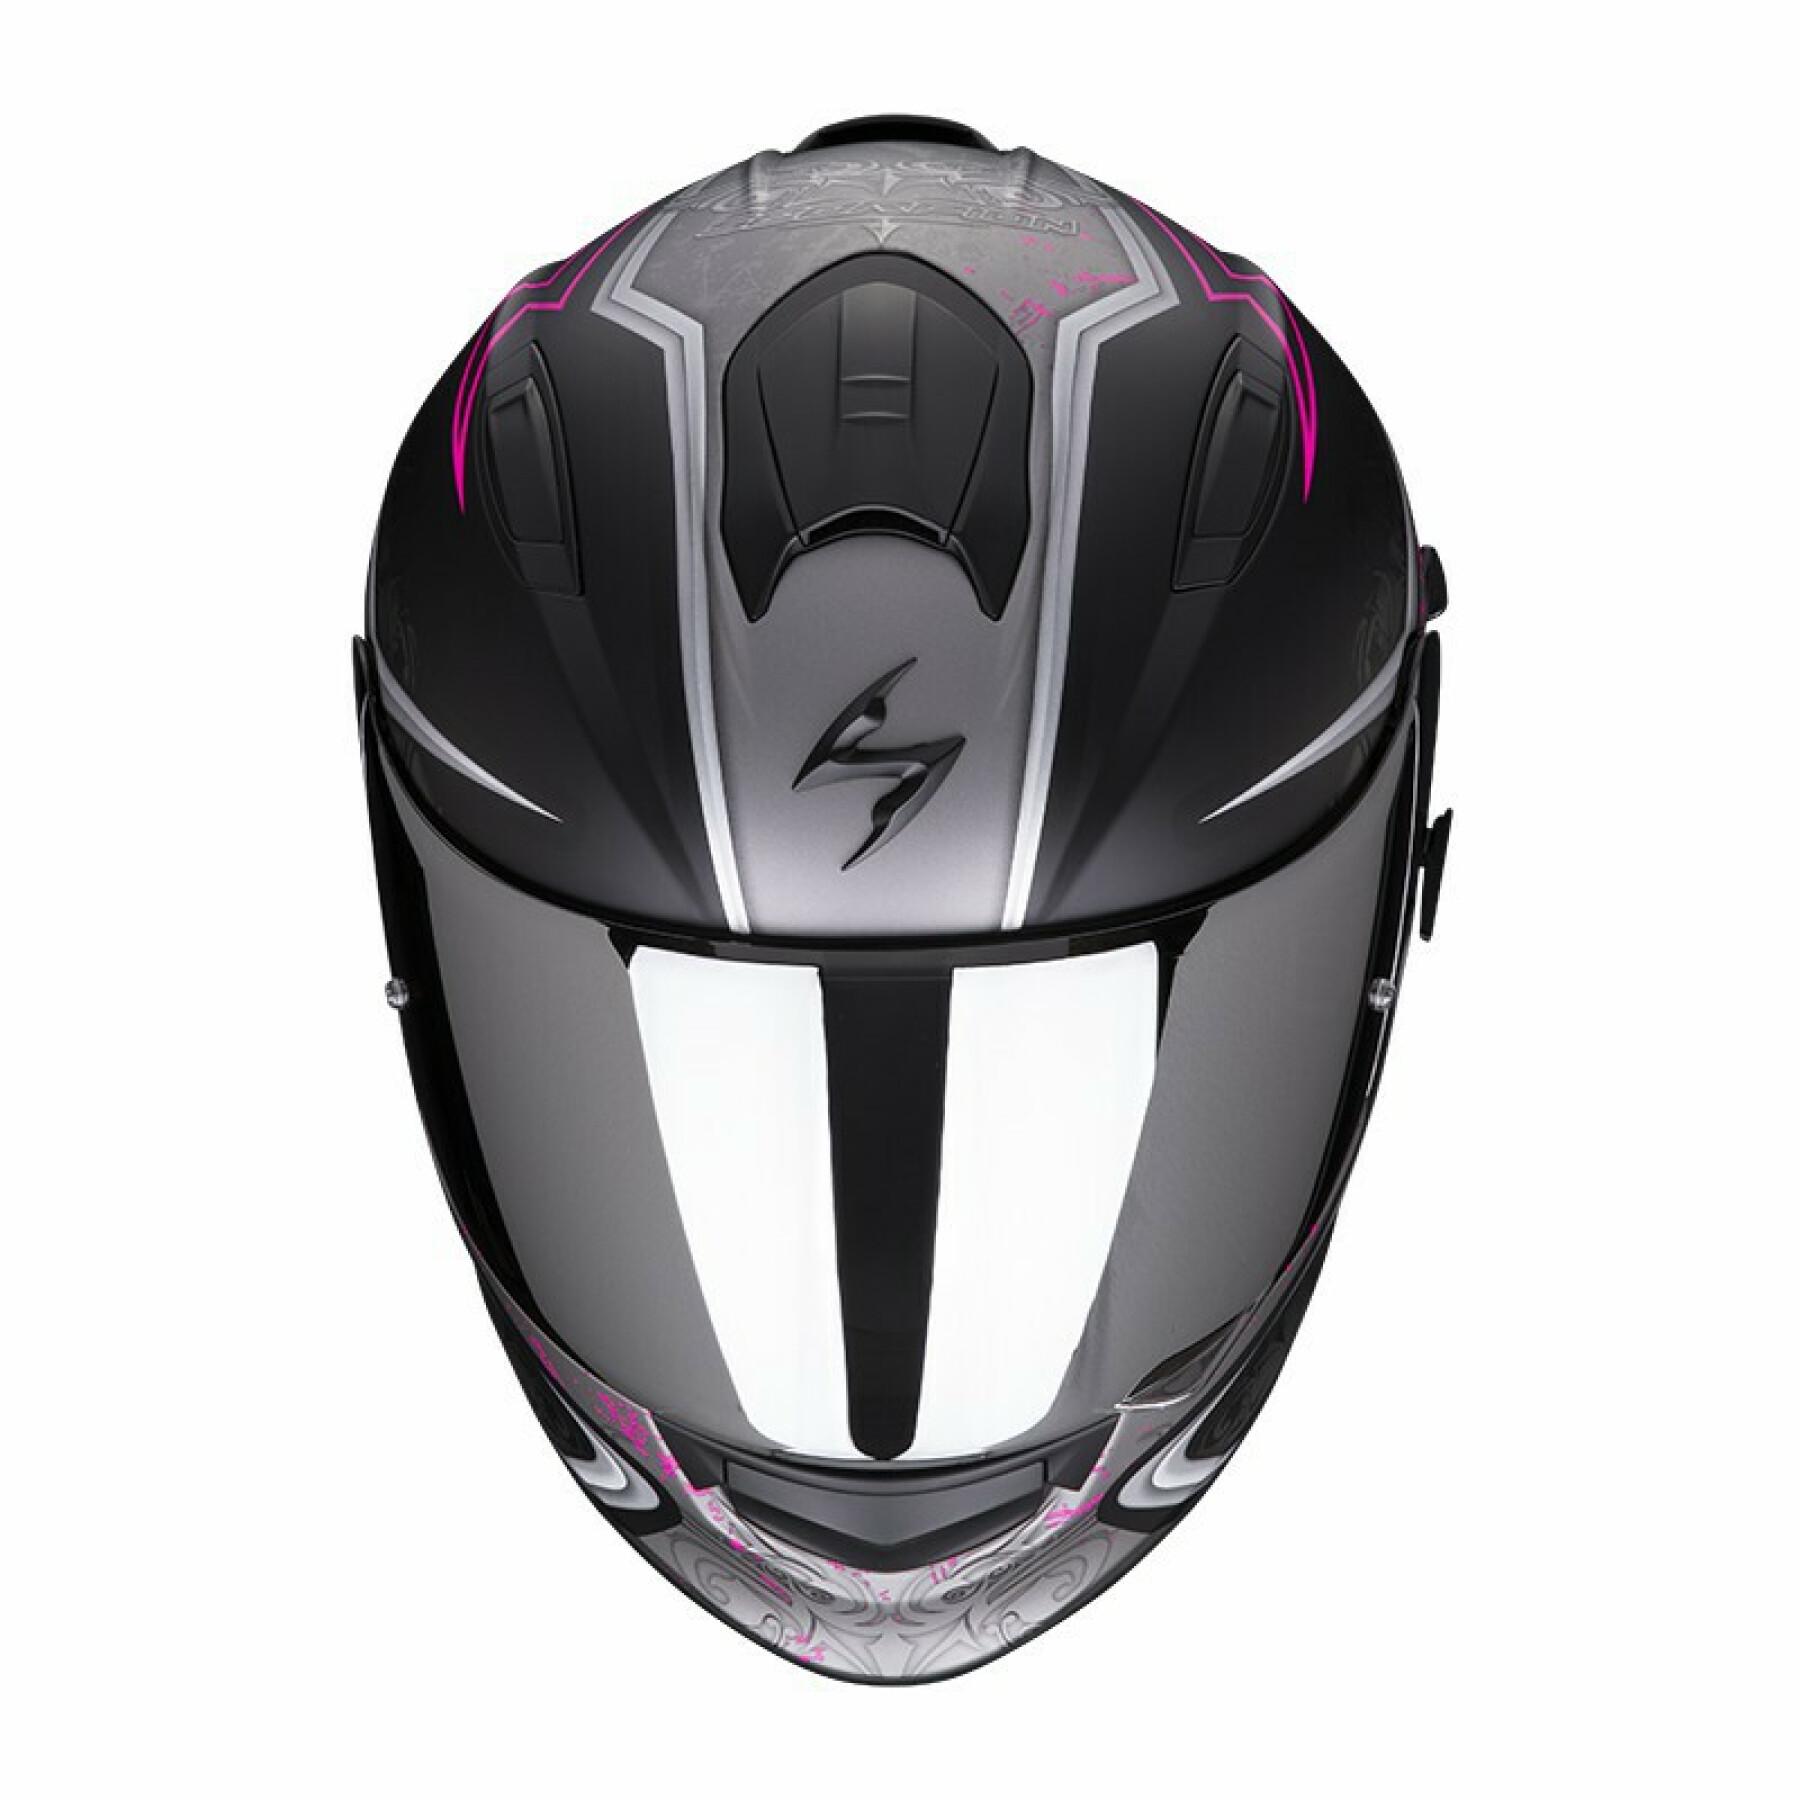 Full face helmet Scorpion Exo-491 RUN